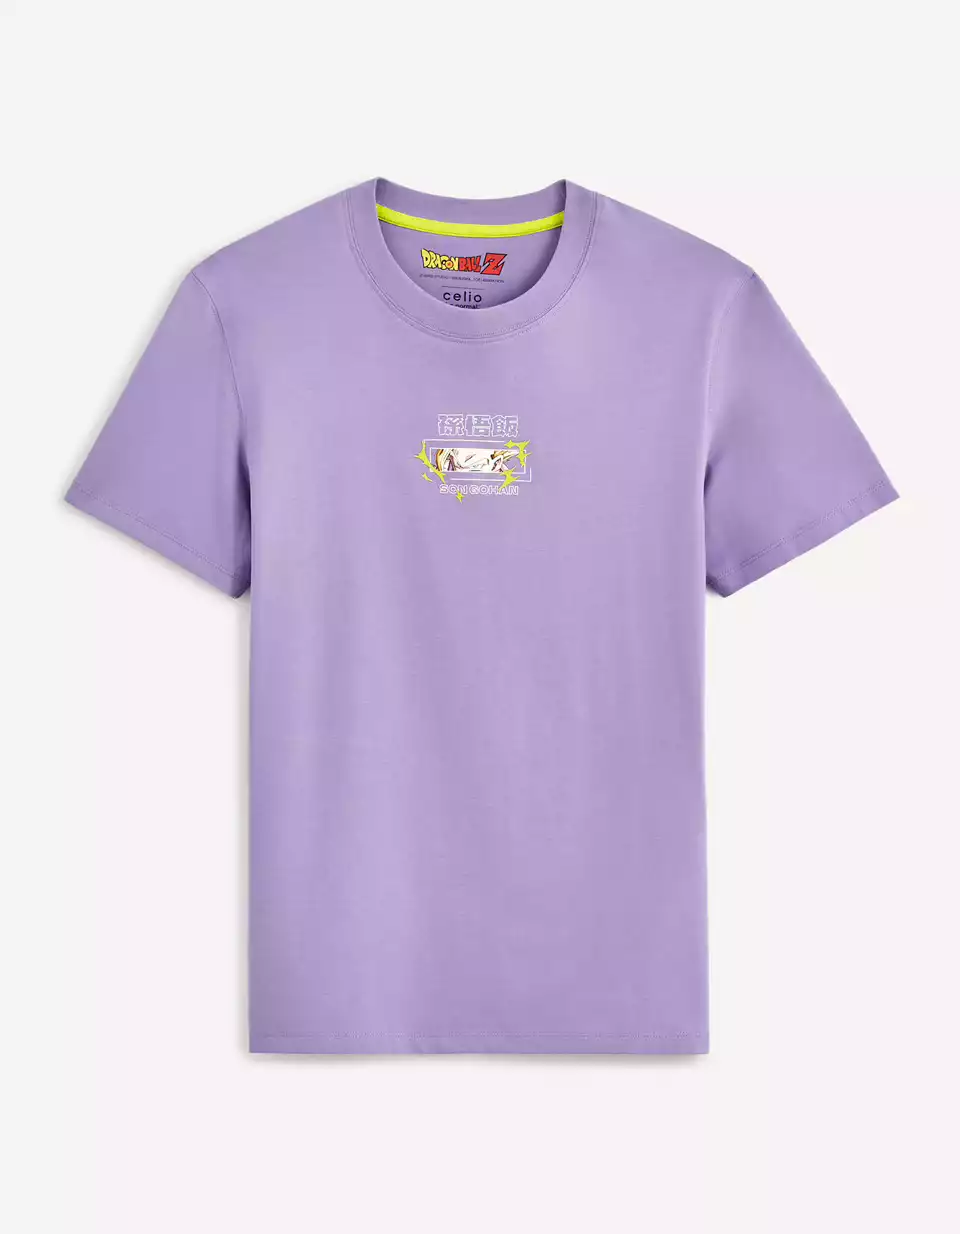 dragon ball z t shirt violet 1121820 1 product copie